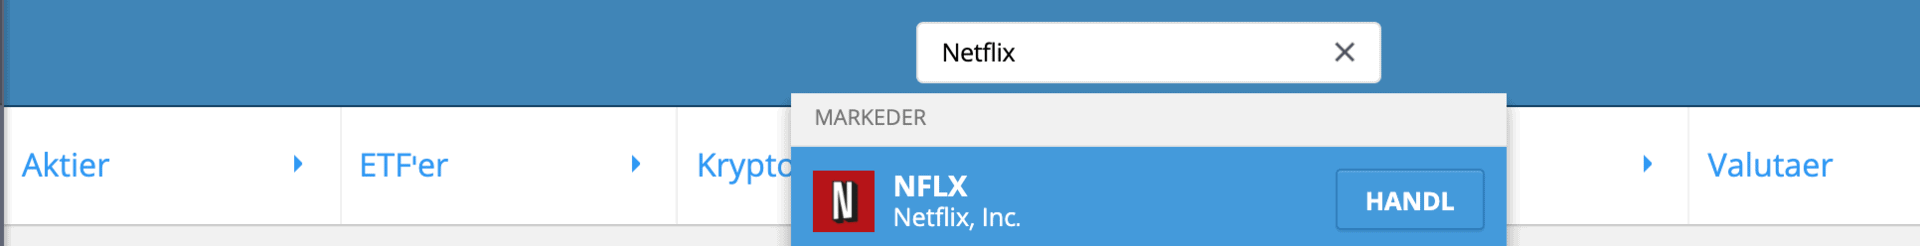 Soeg Netflix Aktier